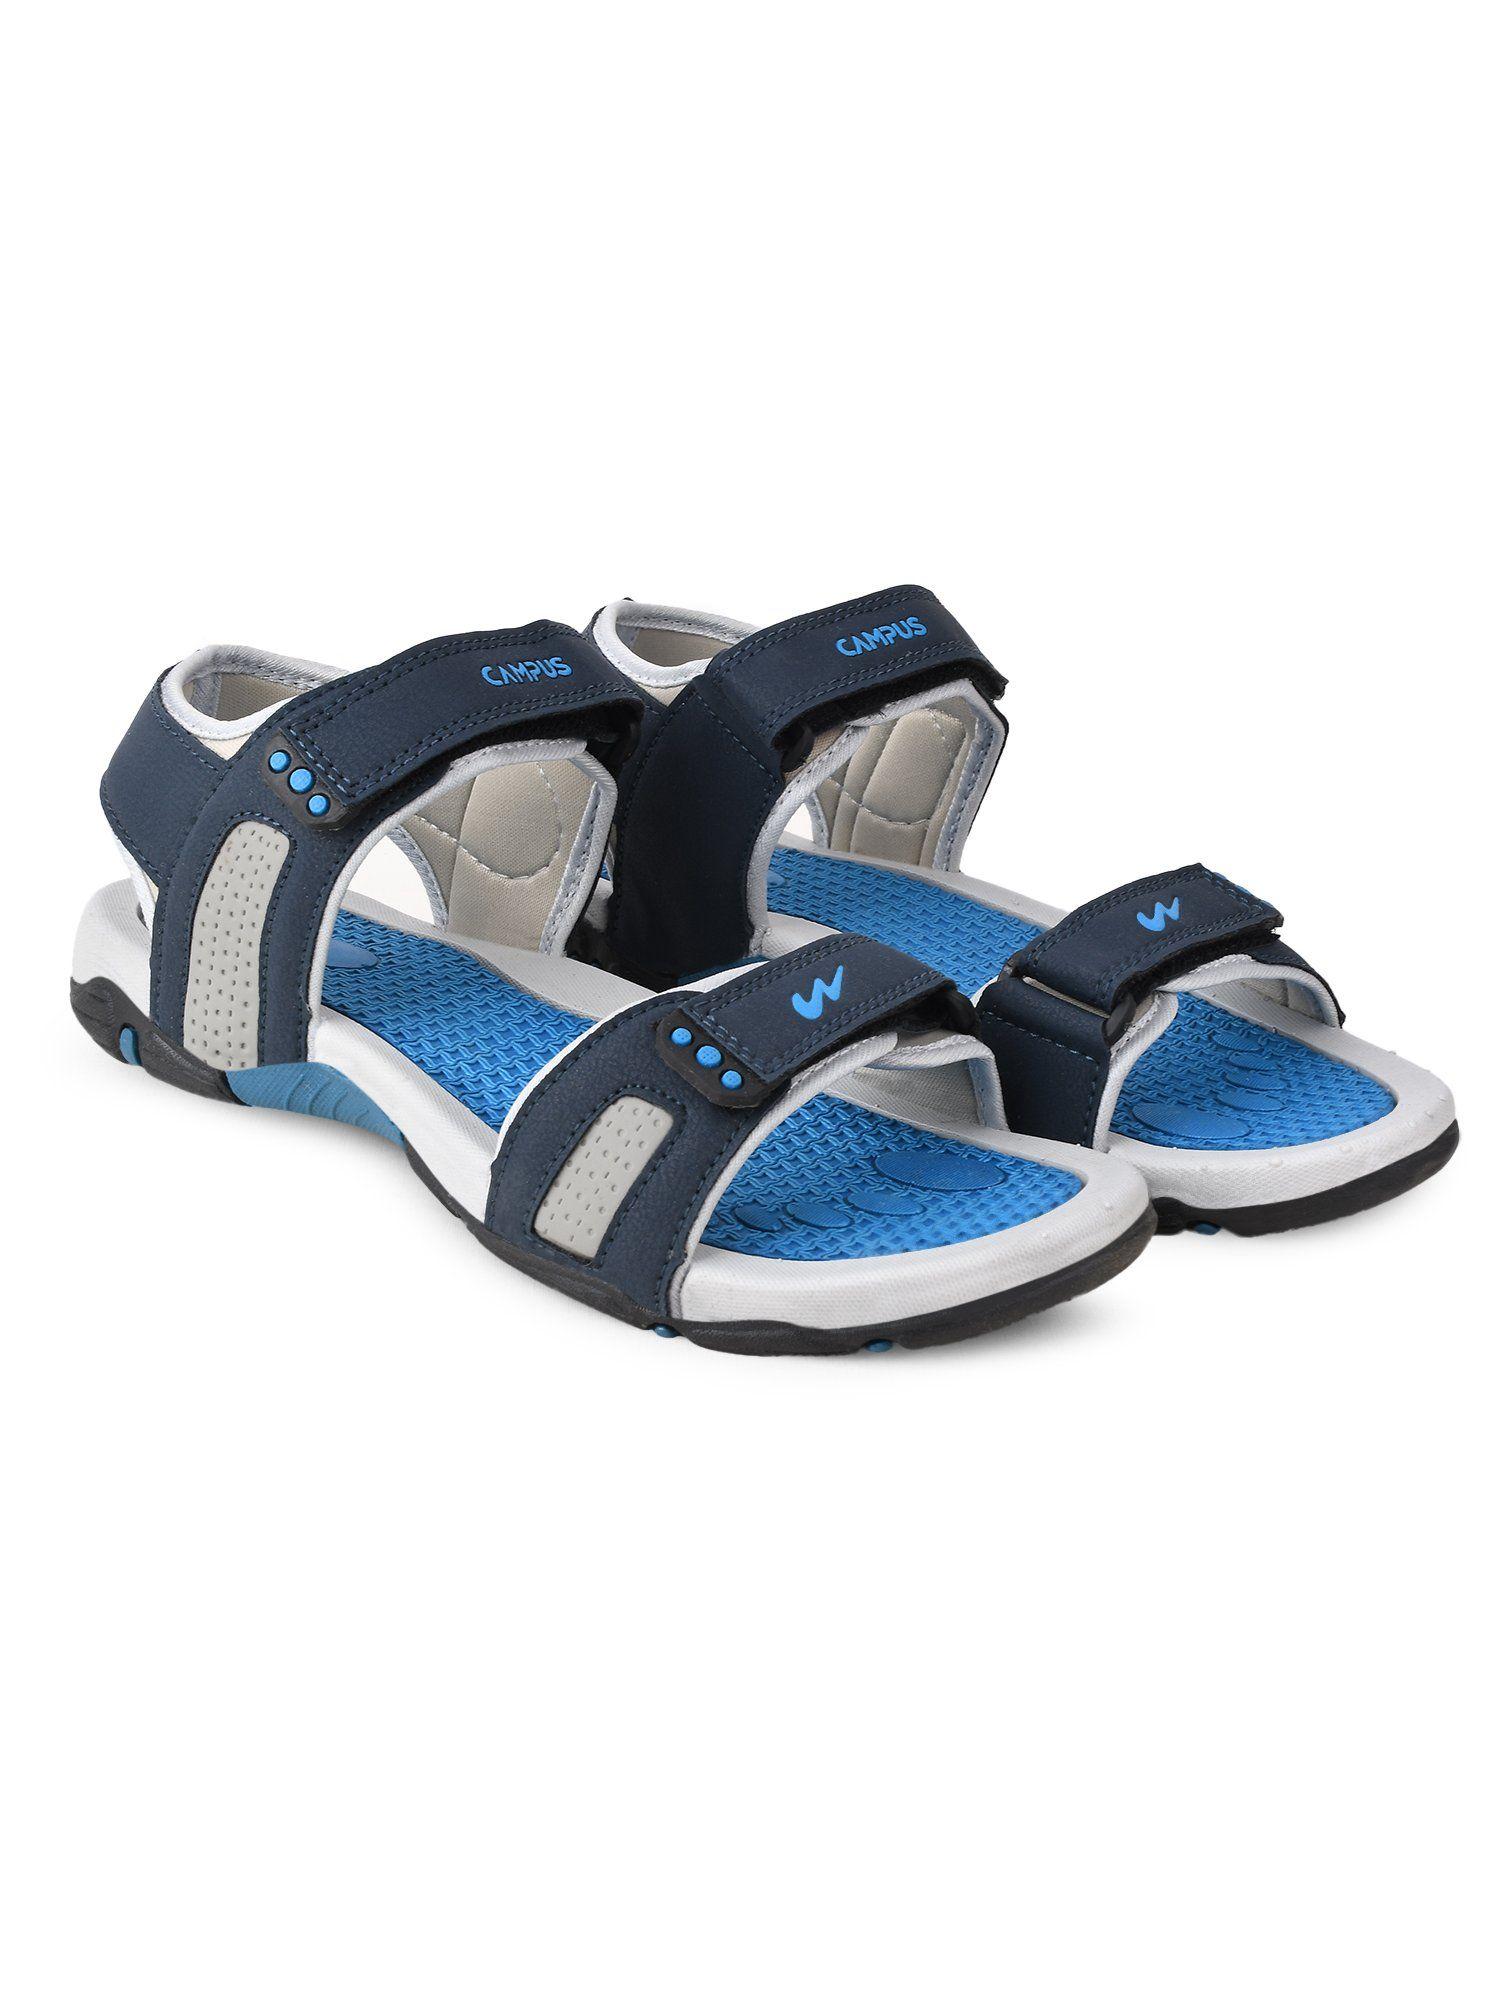 xperia-2 navy blue sandals for men